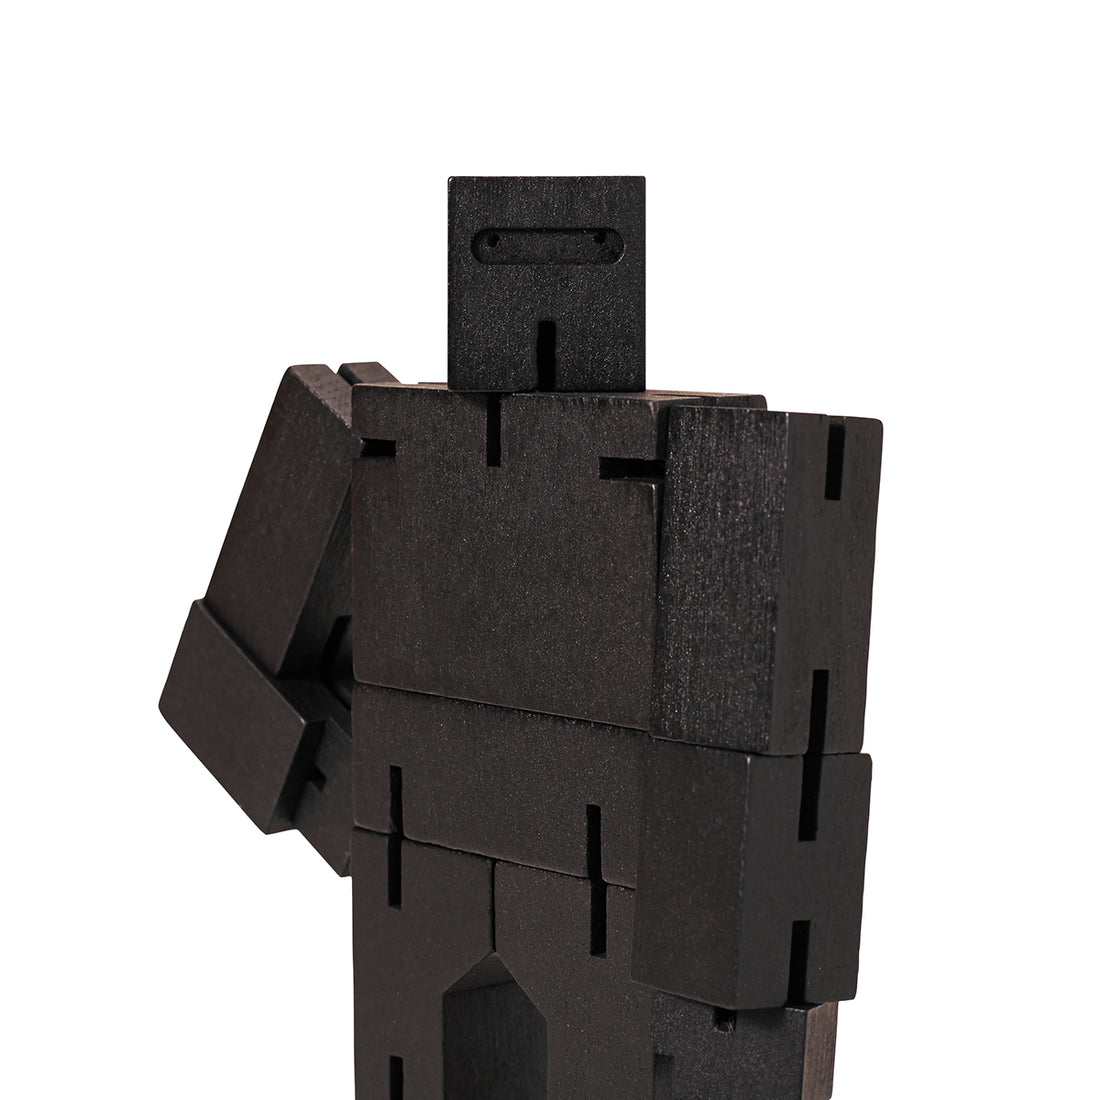 Cubebot Small Ninja | Black